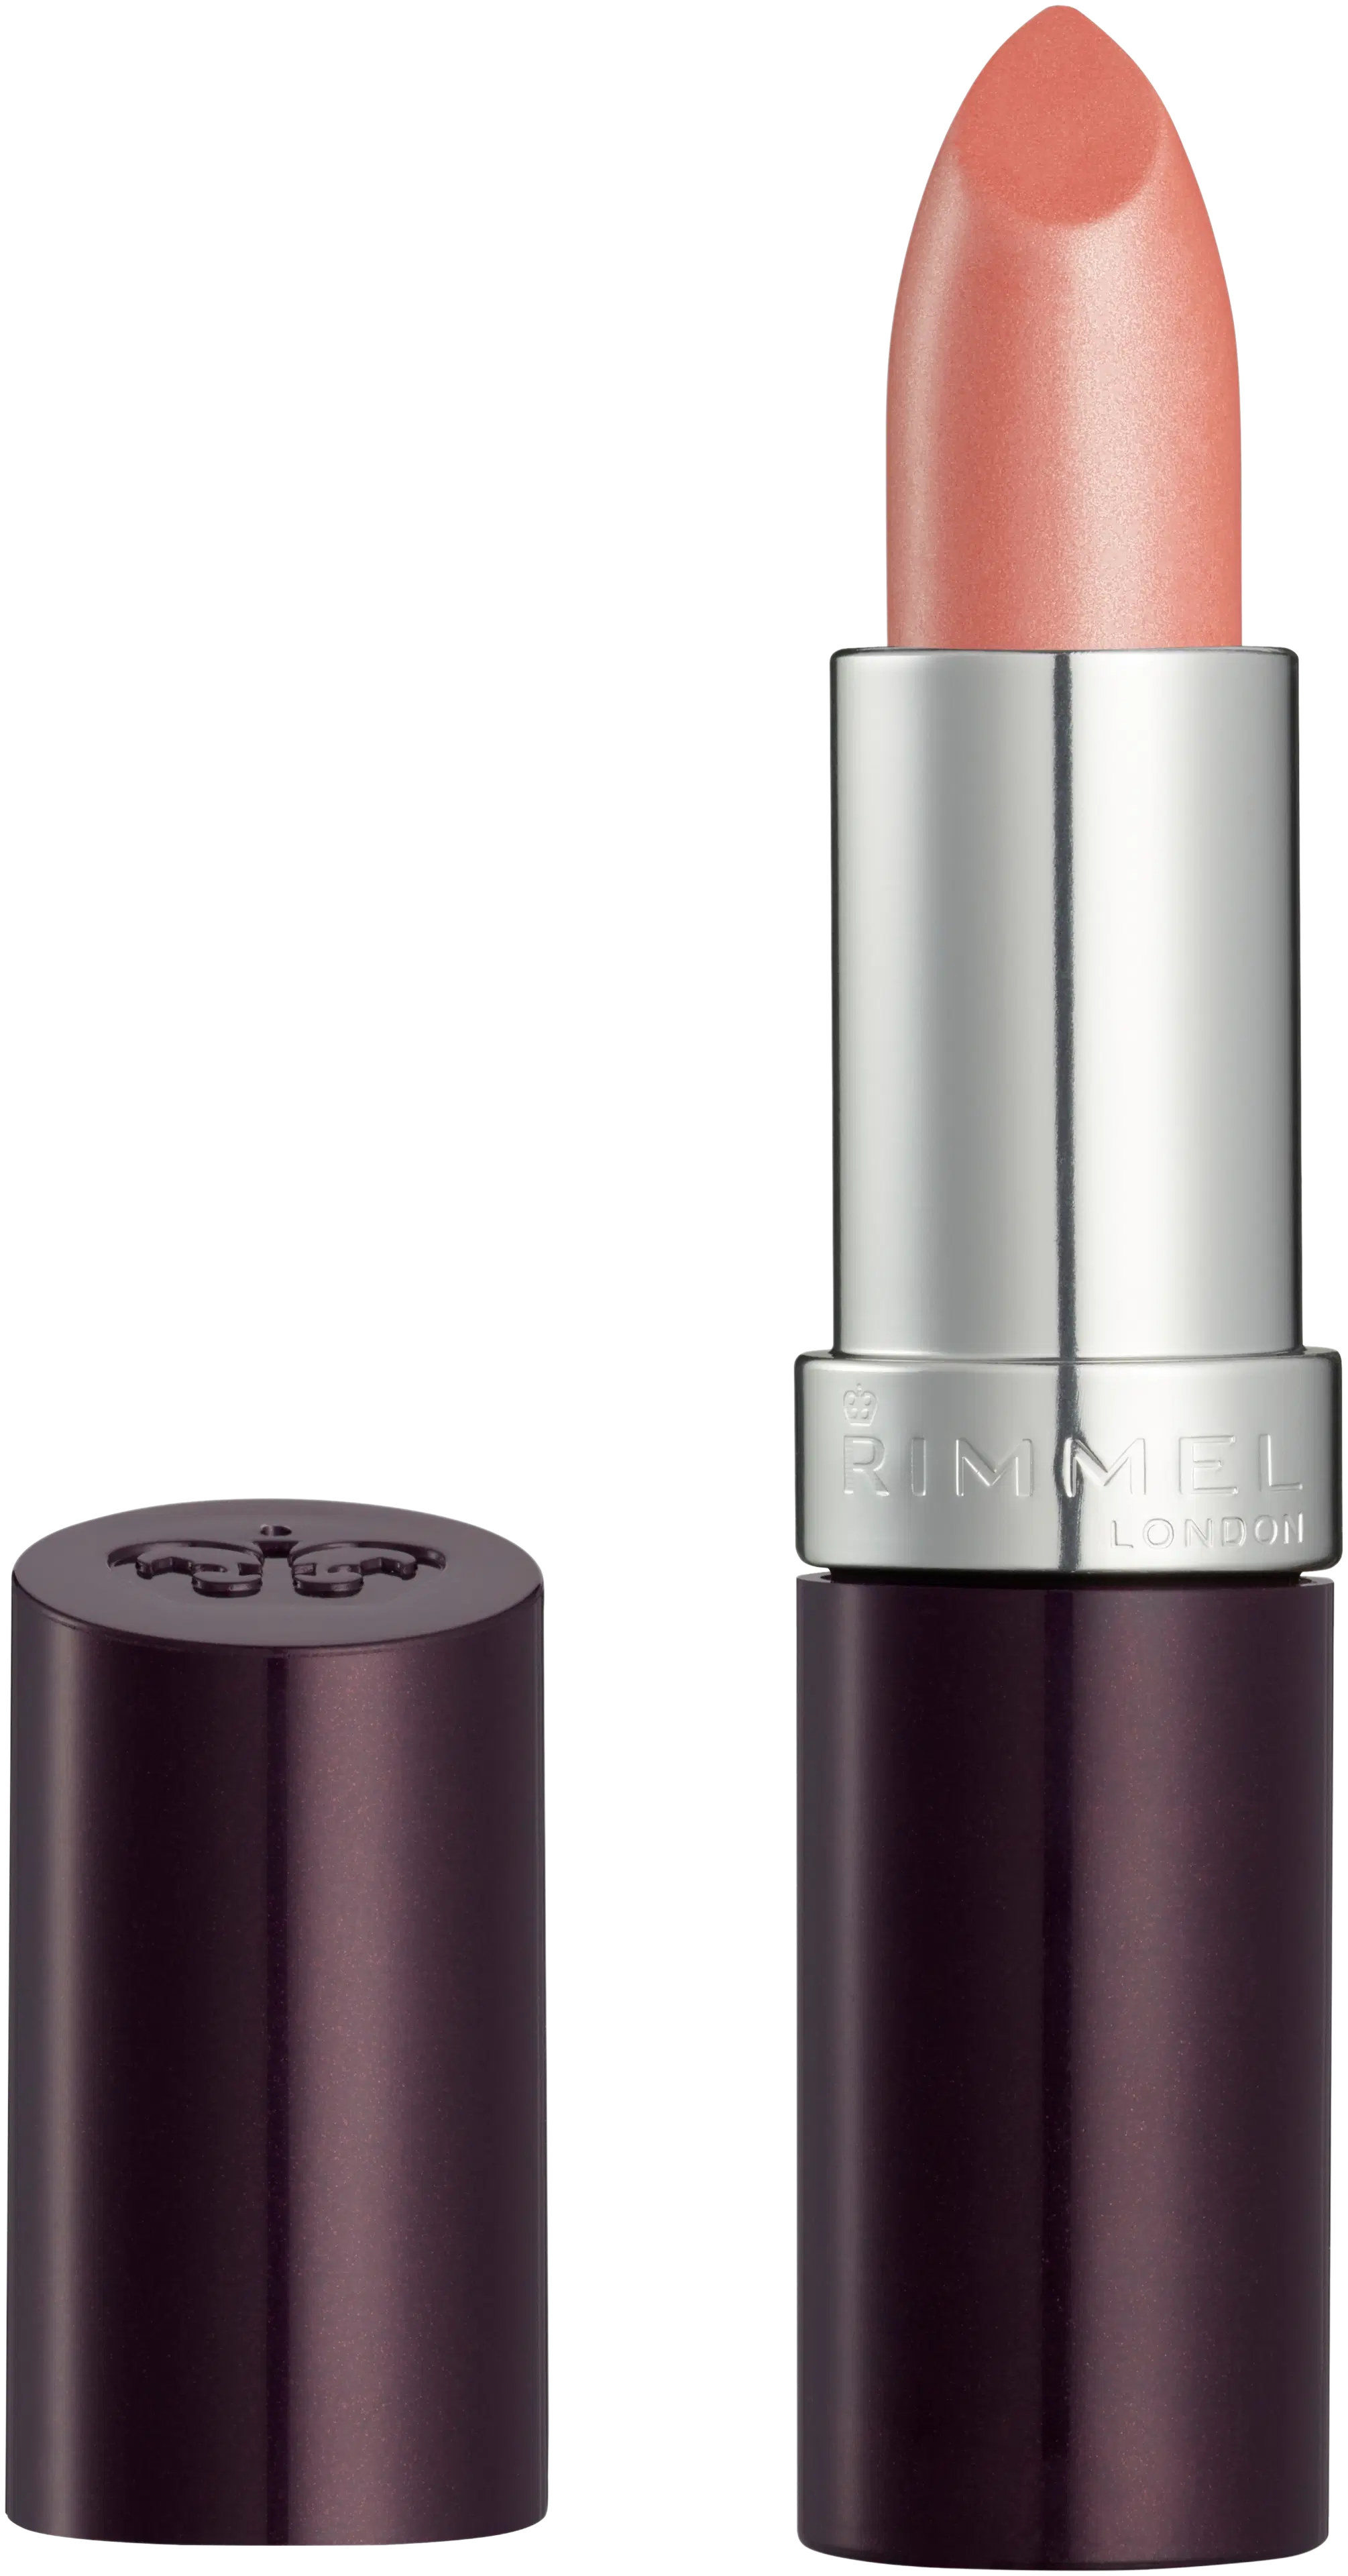 Rimmel 4g Lasting Finish Lipstick 206 Nude Pink huulipuna